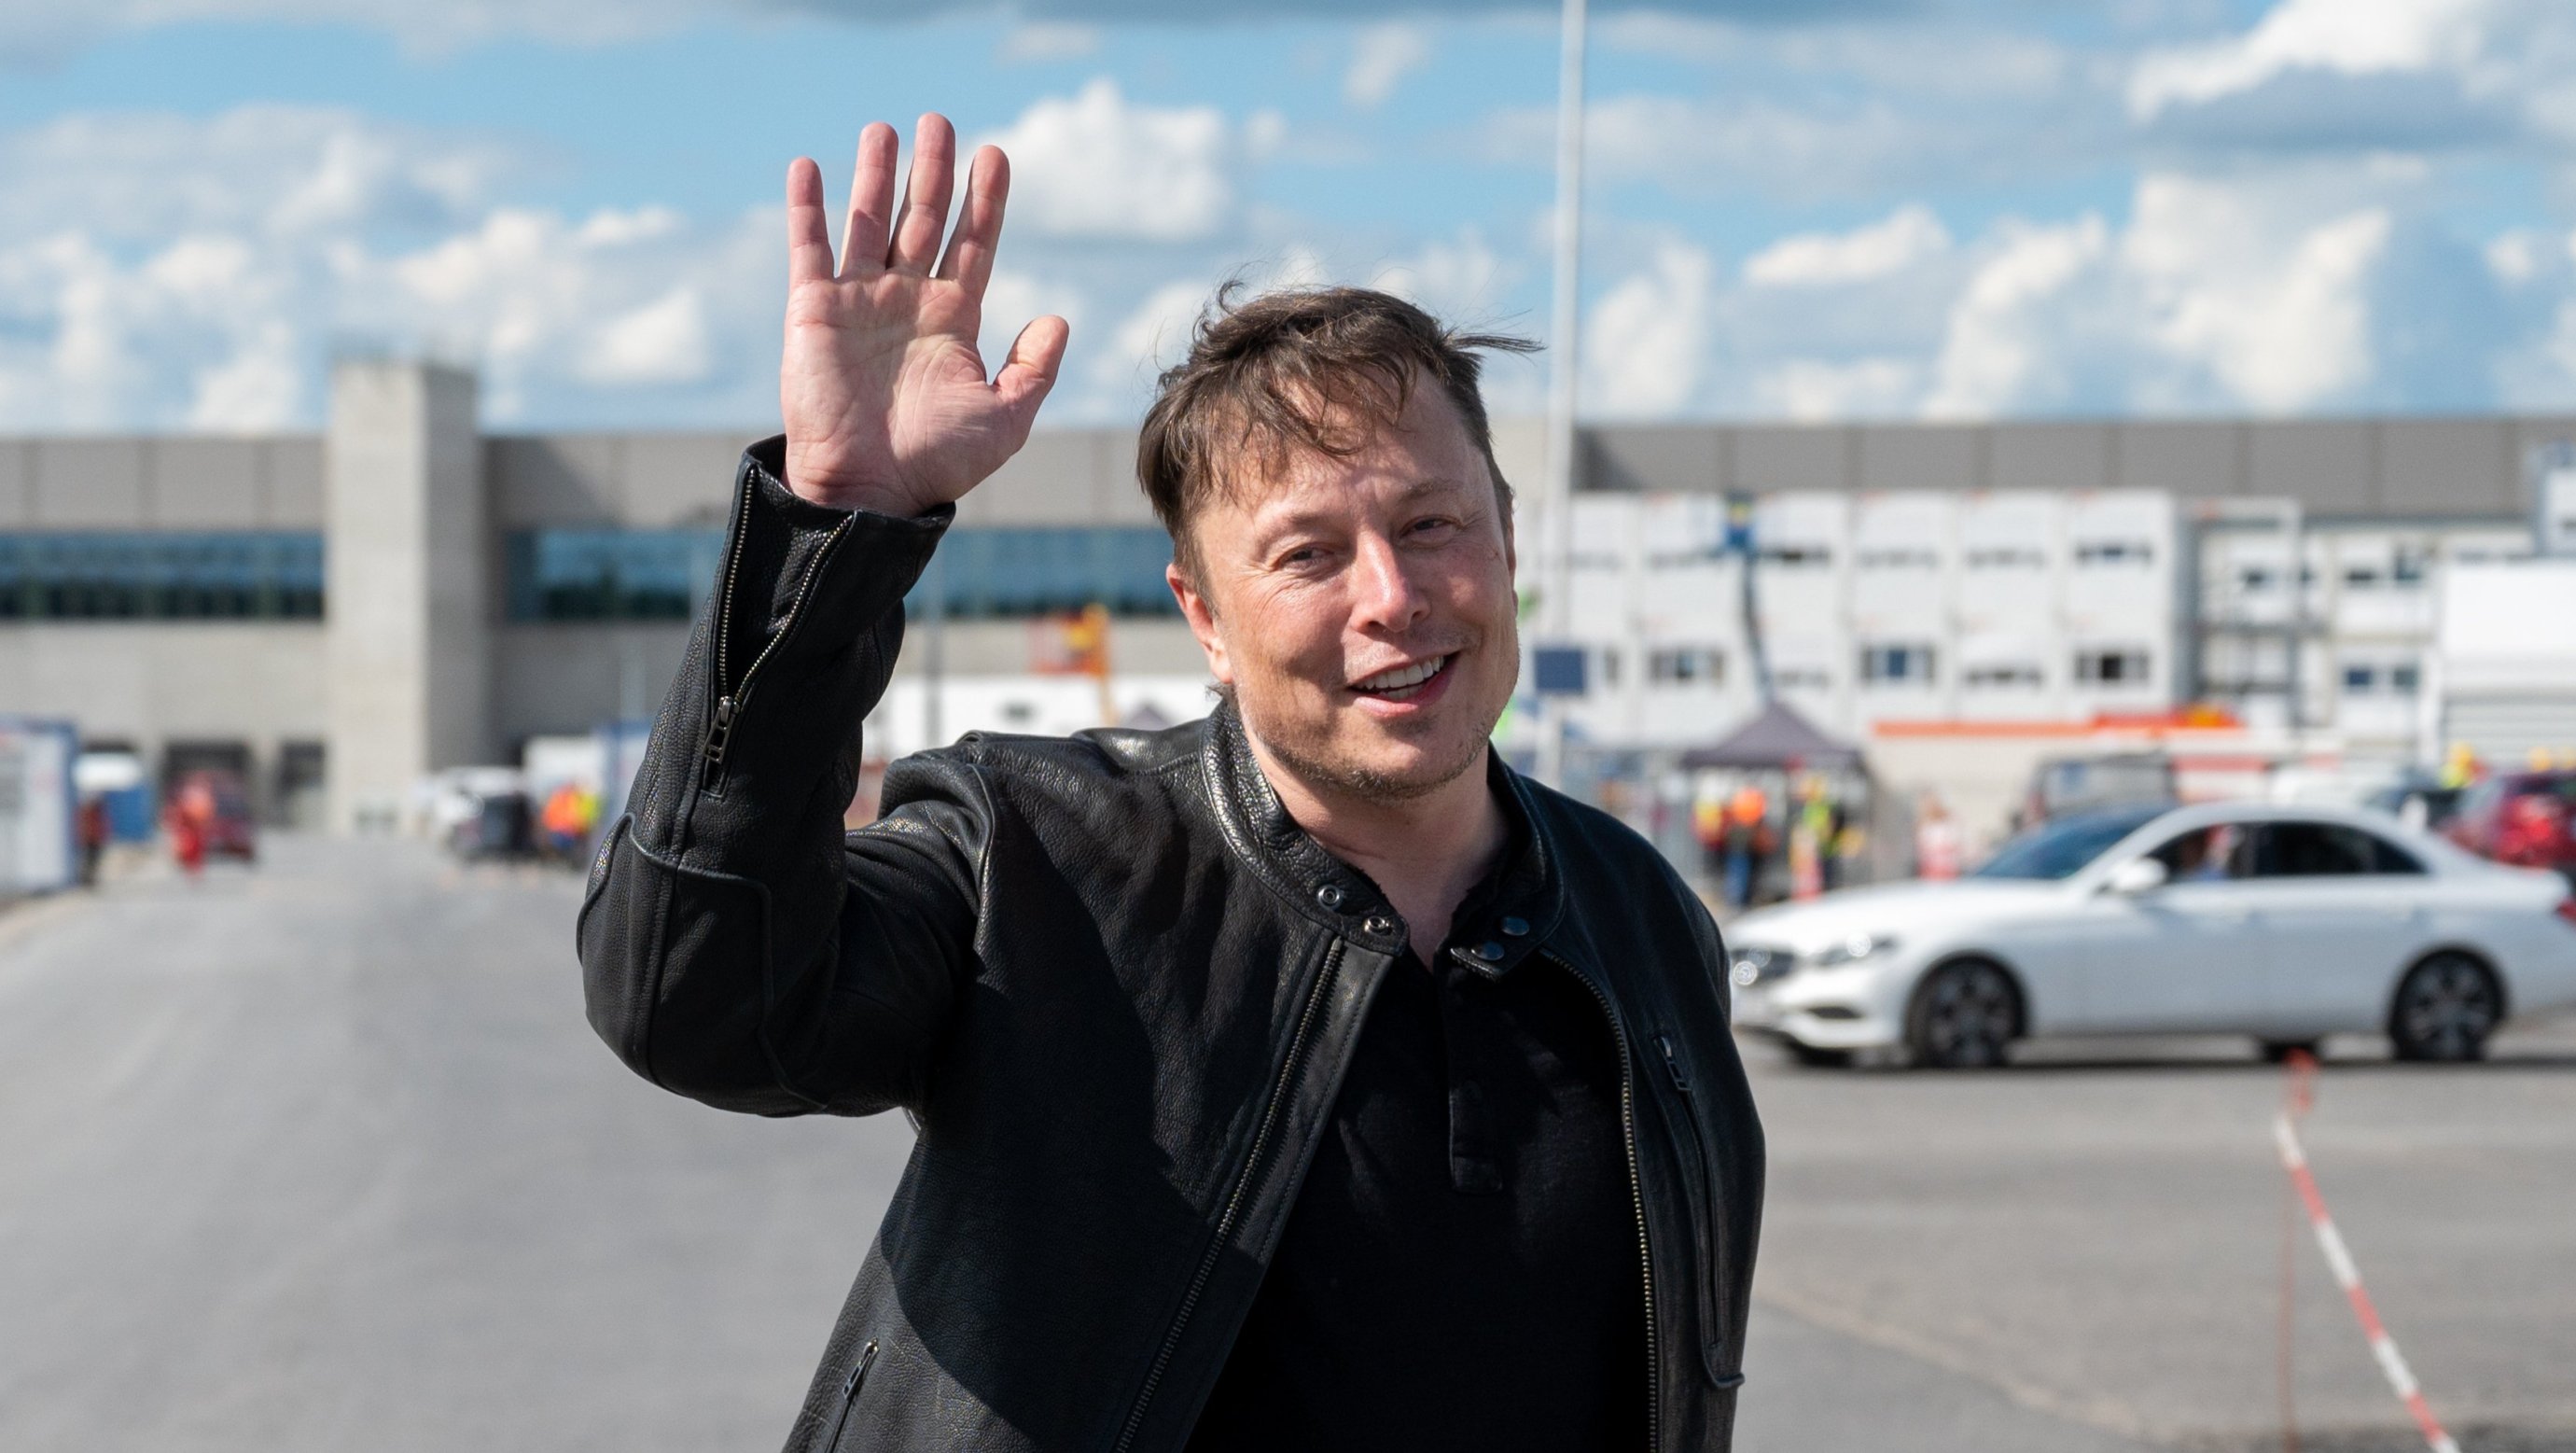 Tesla boss visits factory construction site in Grünheide